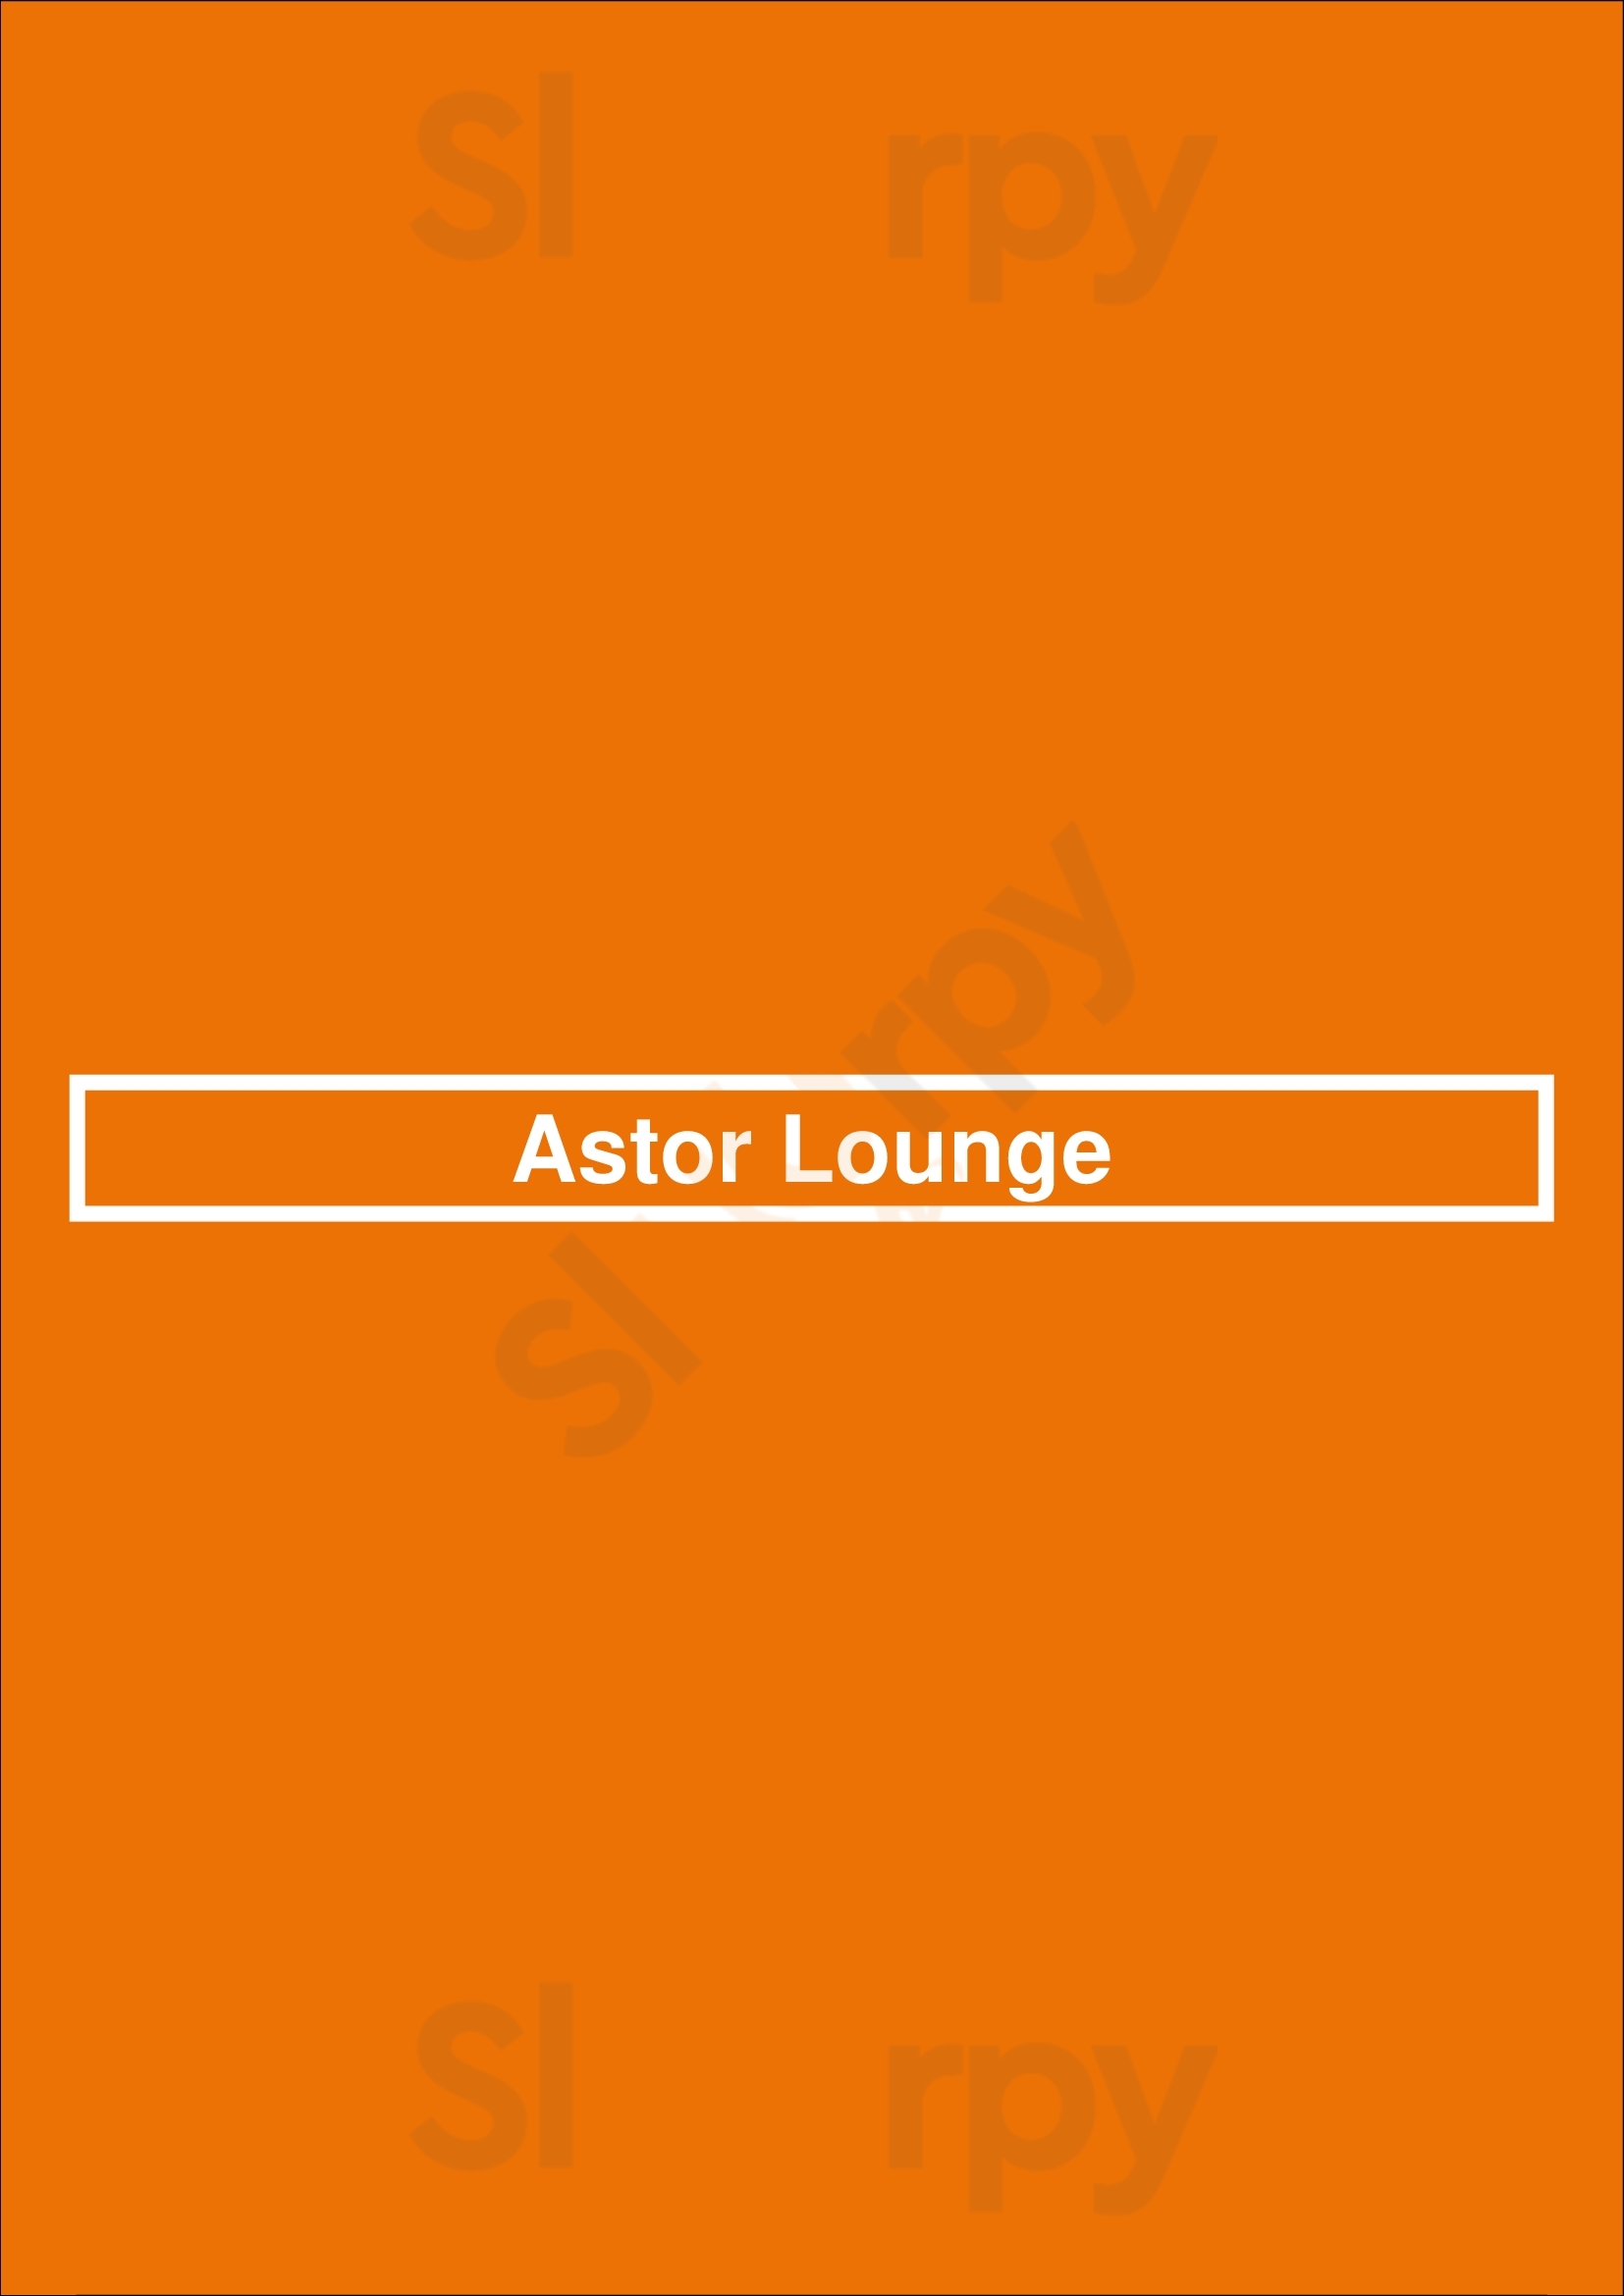 Astor Lounge Toronto Menu - 1